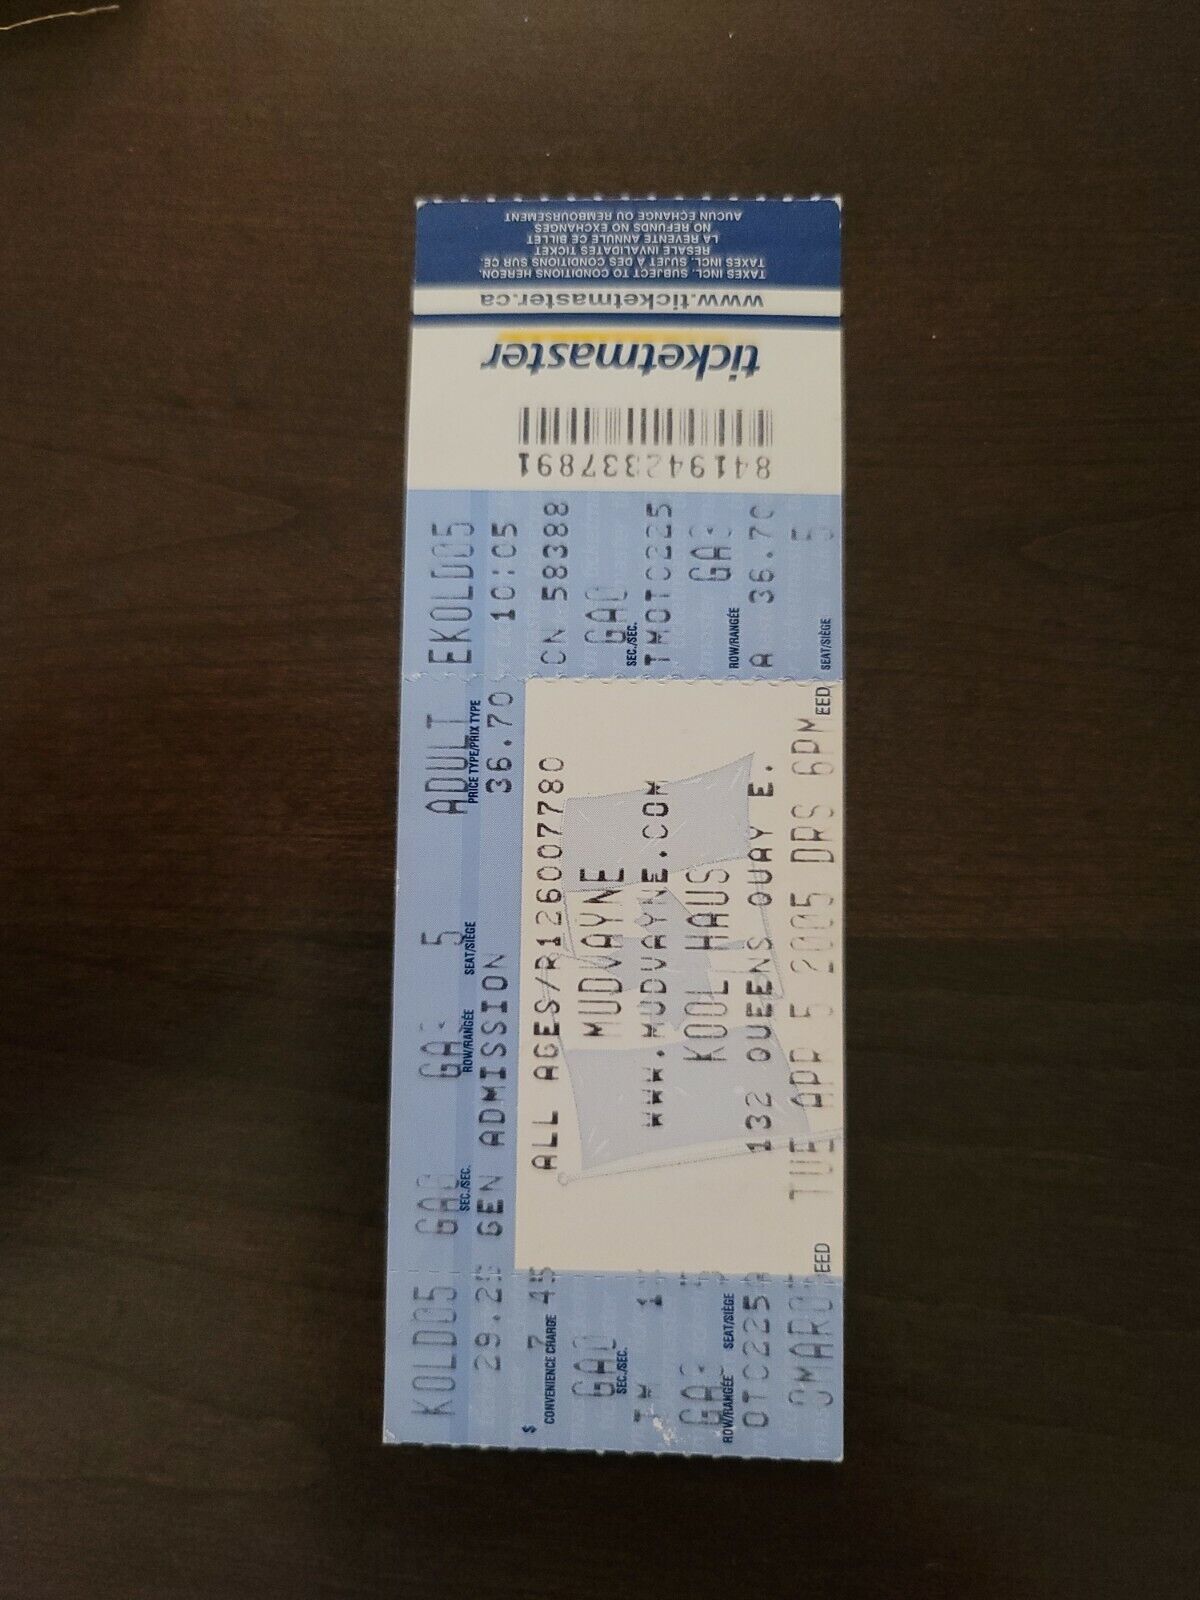 Mudvayne 2005, Toronto Kool Haus Original Concert Ticket Stub